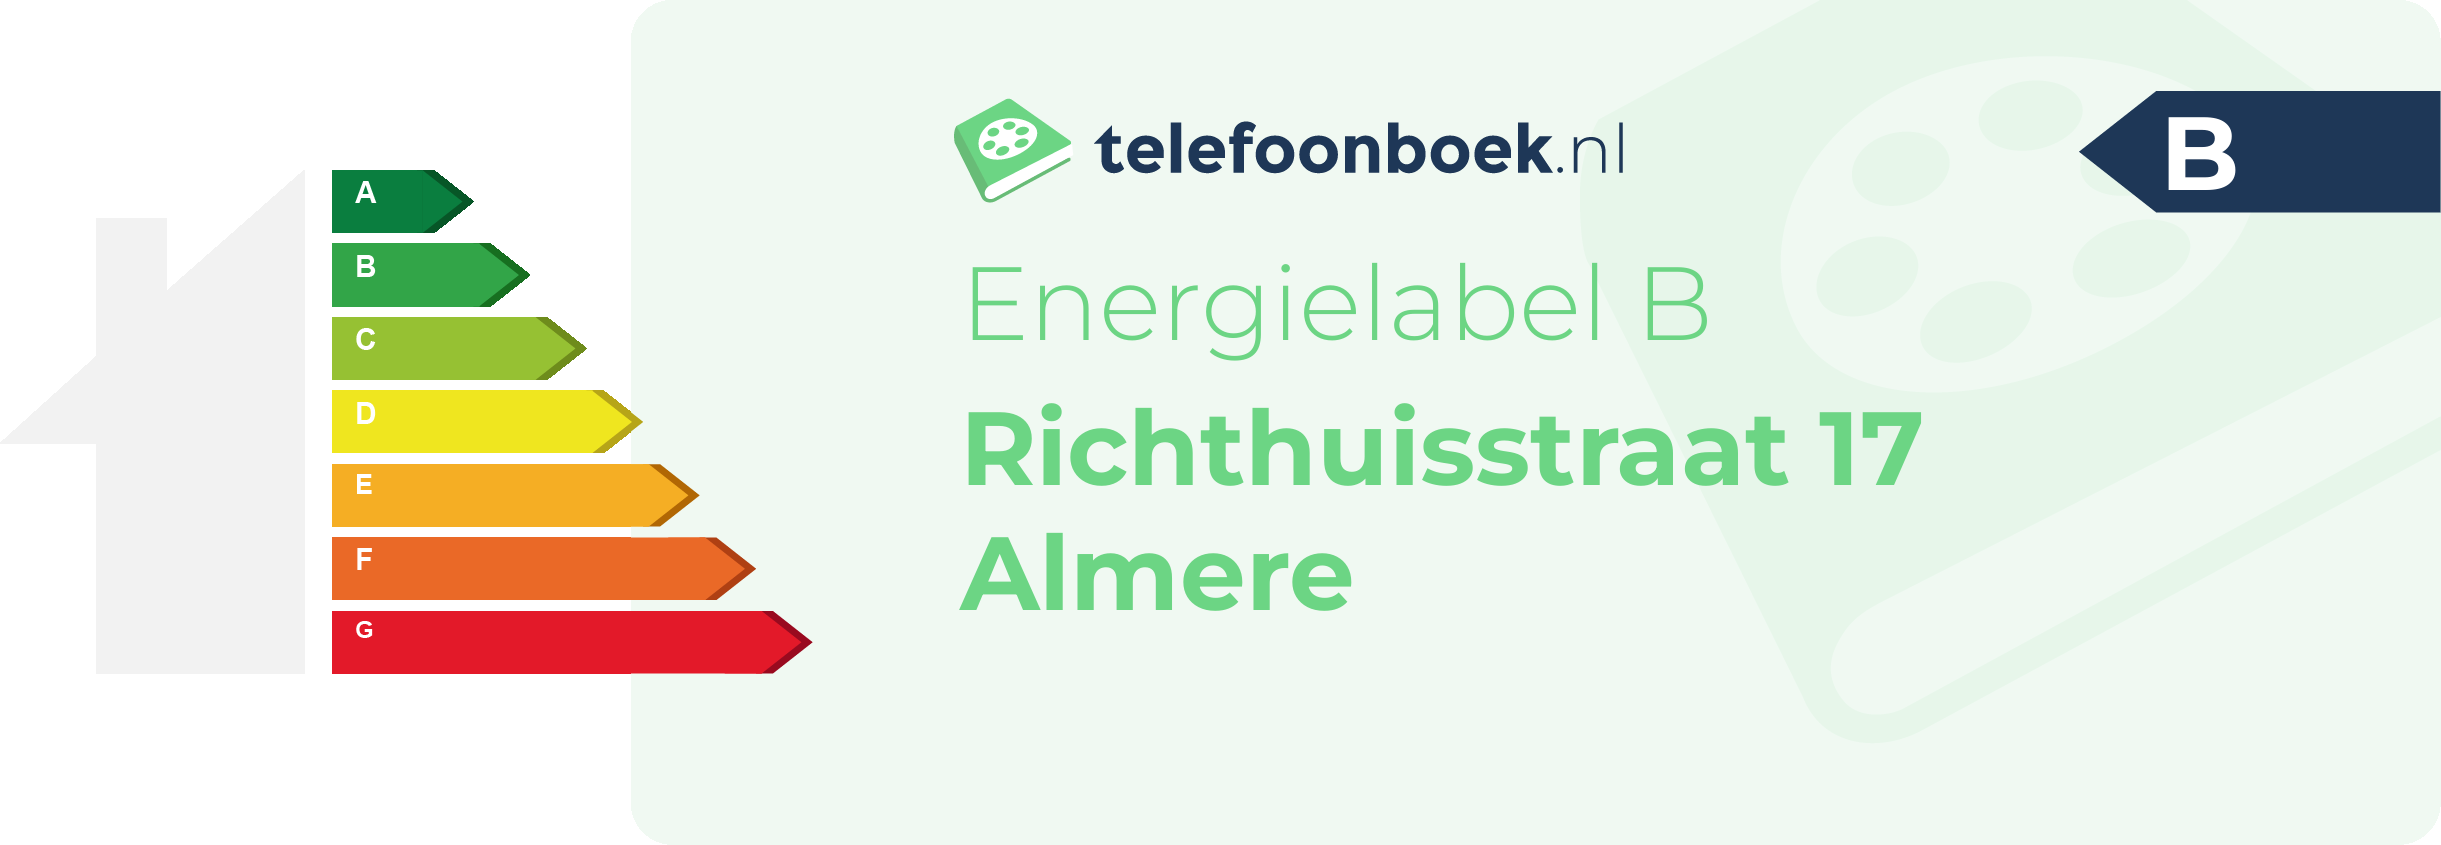 Energielabel Richthuisstraat 17 Almere